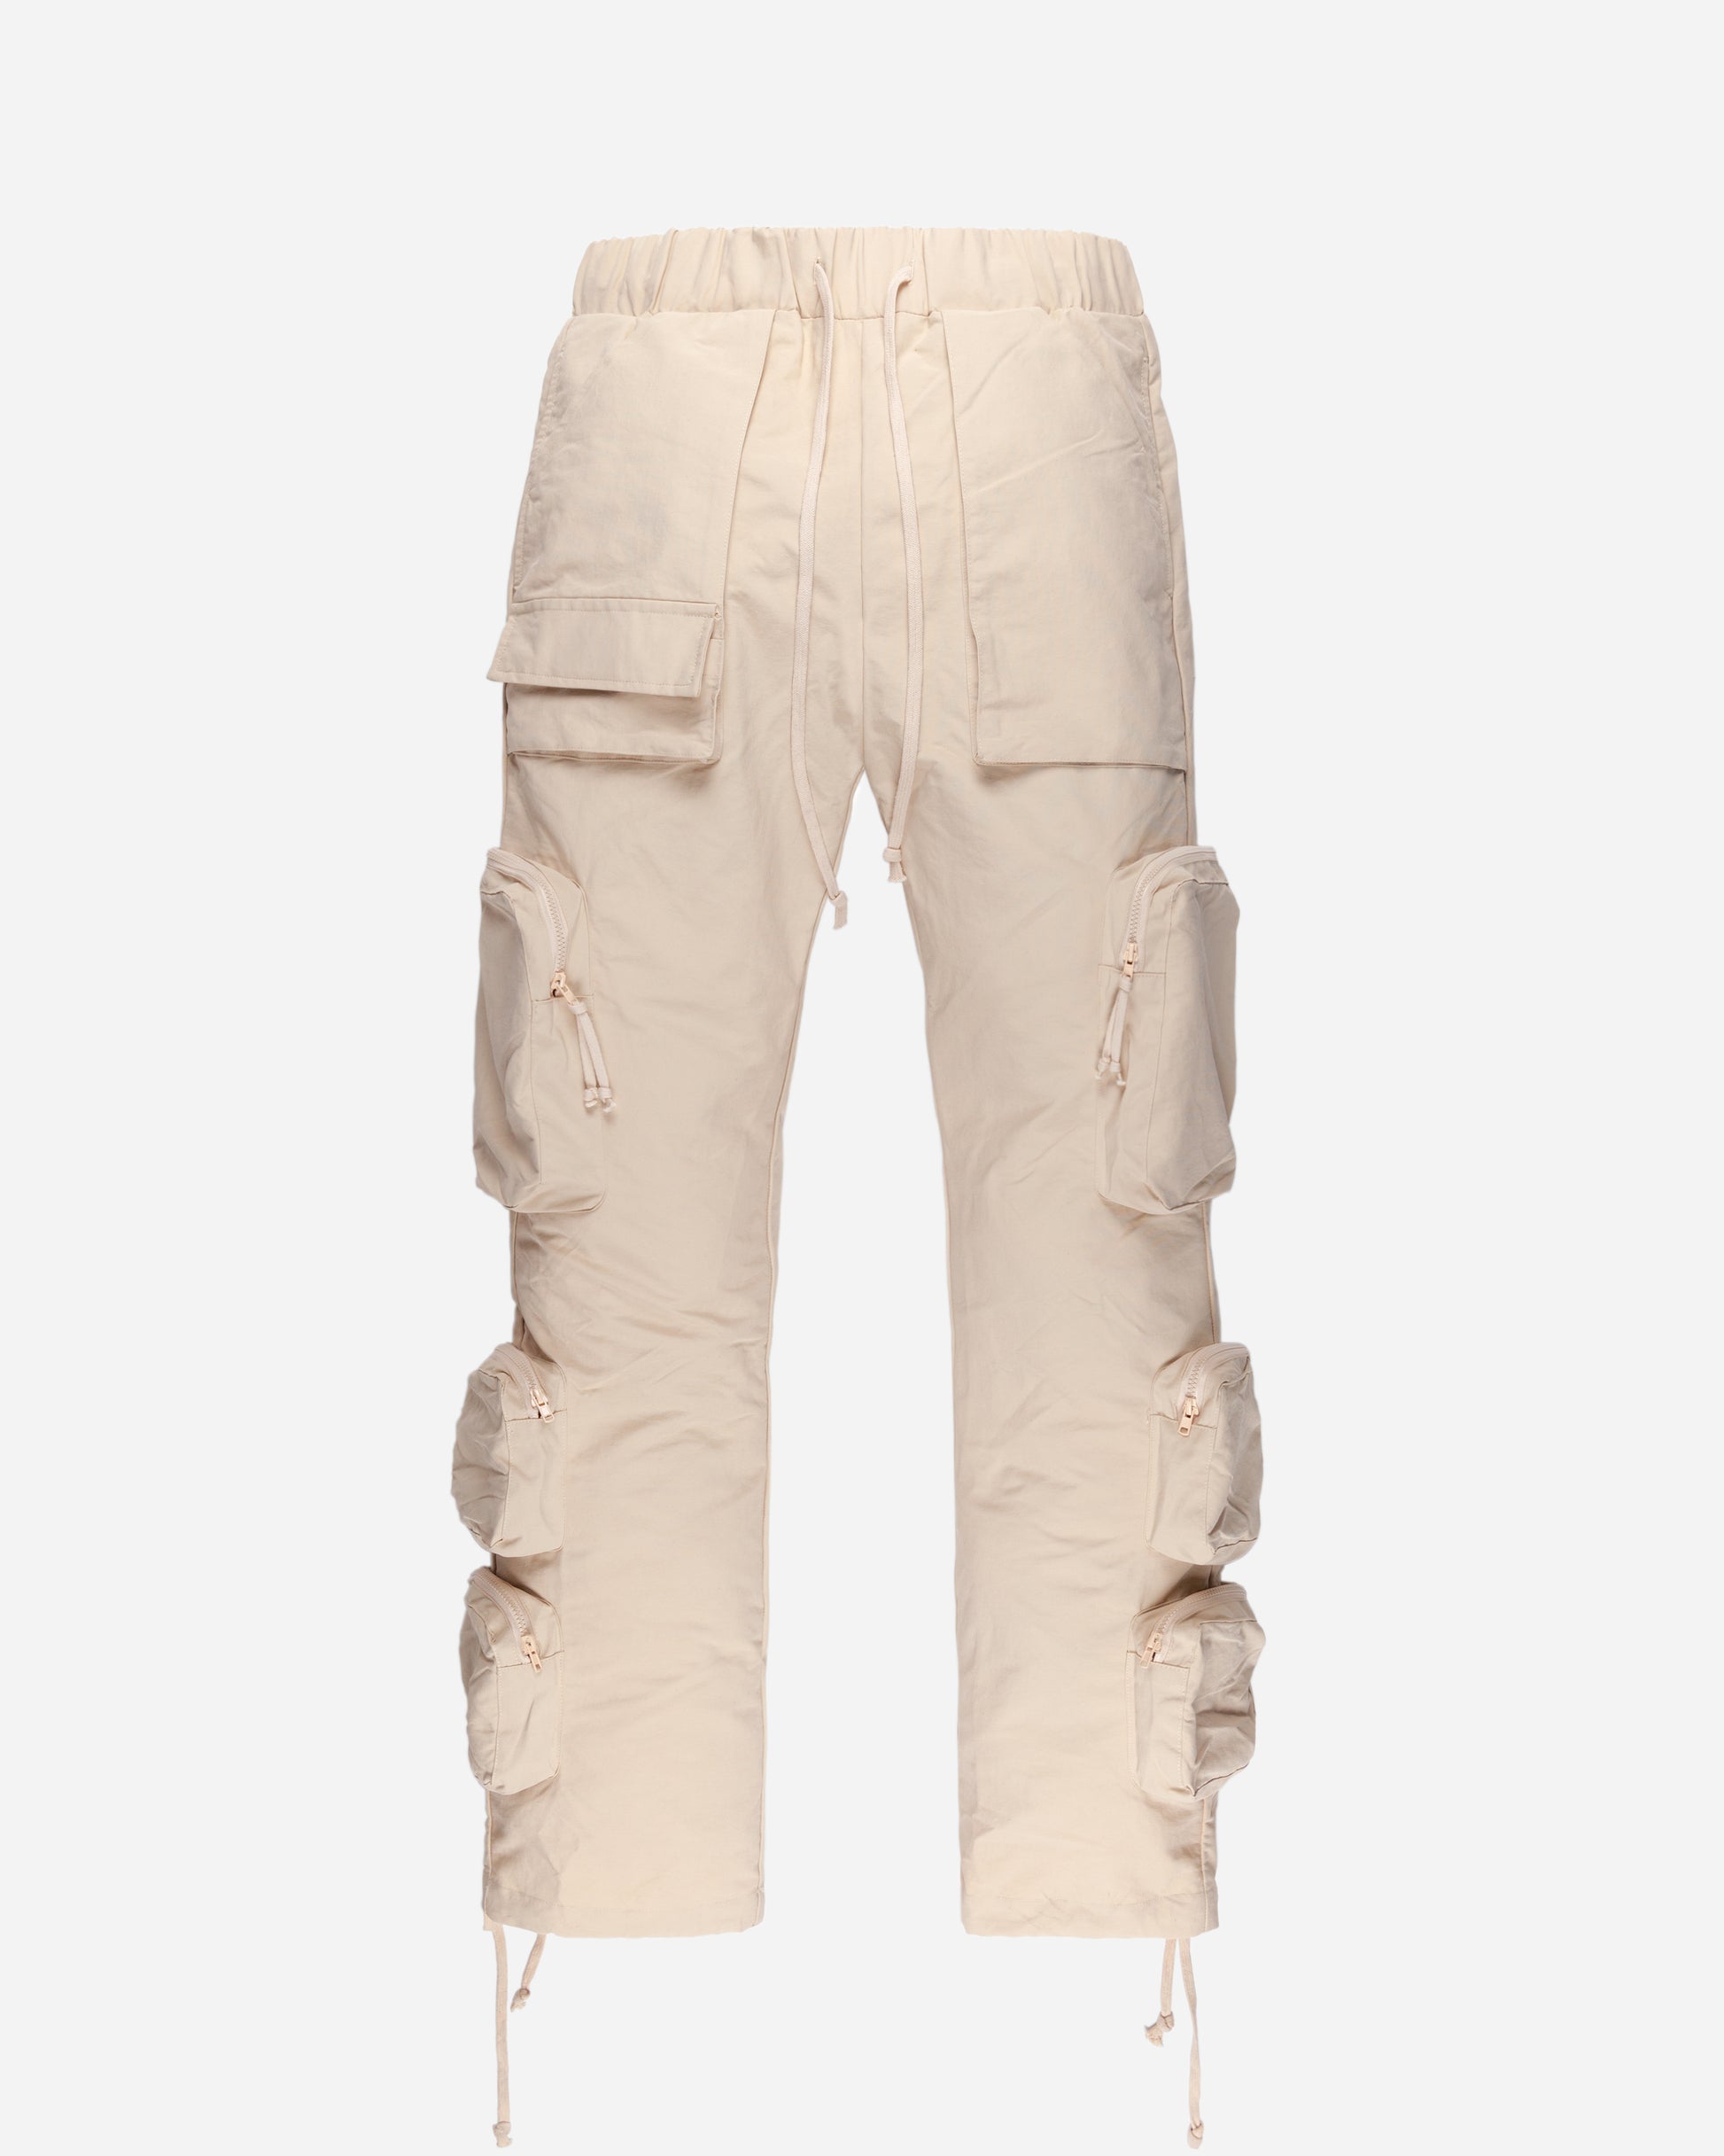 - Pocket SILVER Exclusive Silver Six Pants LEAGUE - “Bone” Whoisjacov League Cargo